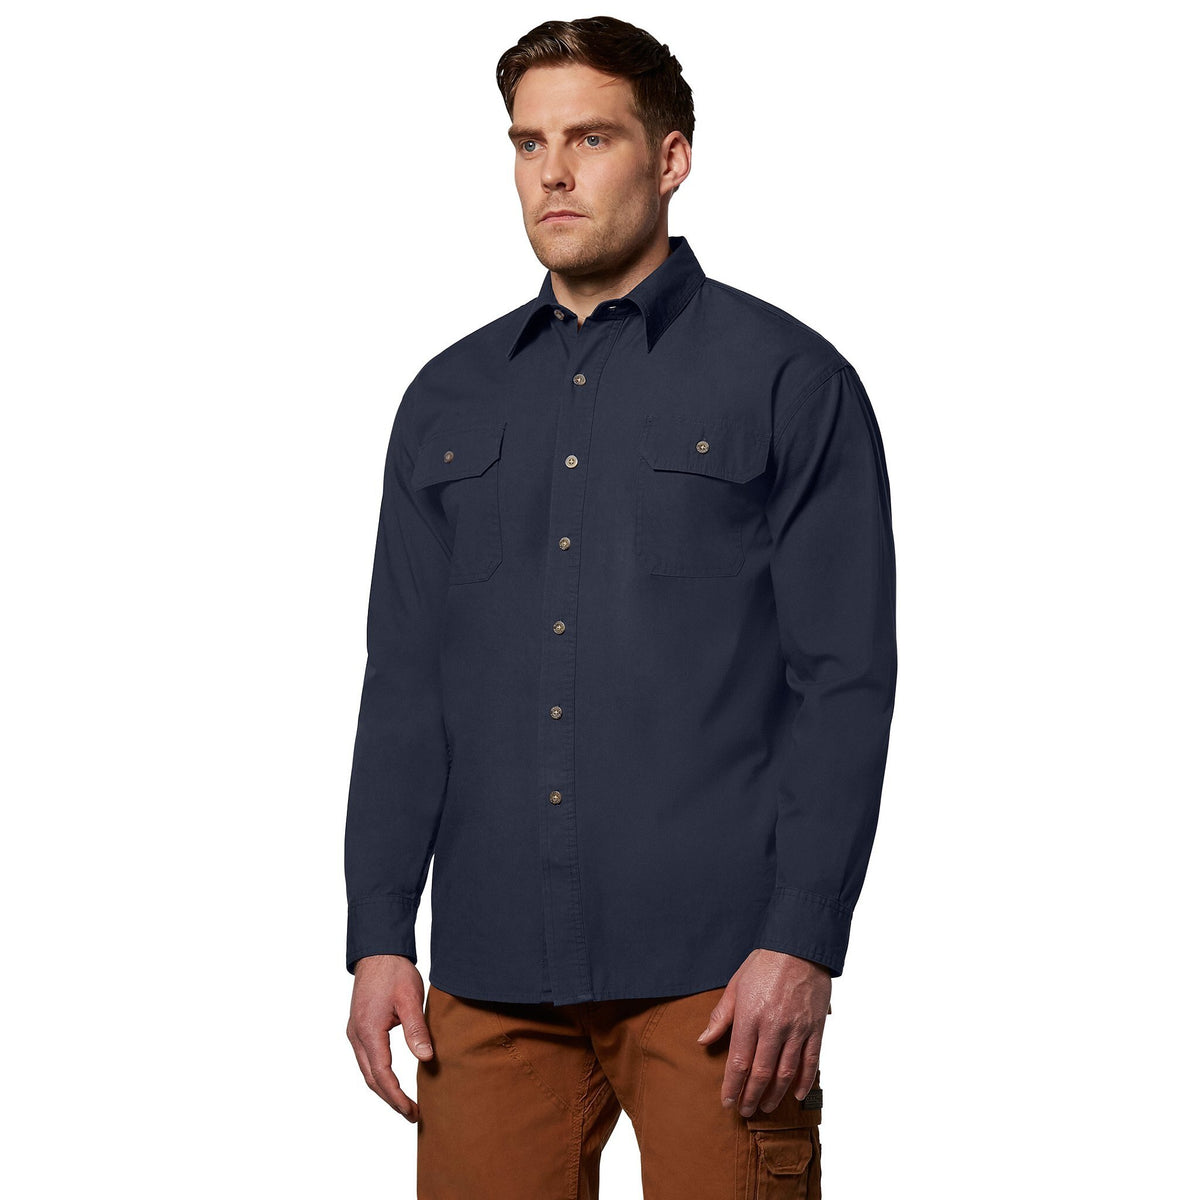 Men's long sleeve 100% cotton contractor work shirt - Navy | Mark's